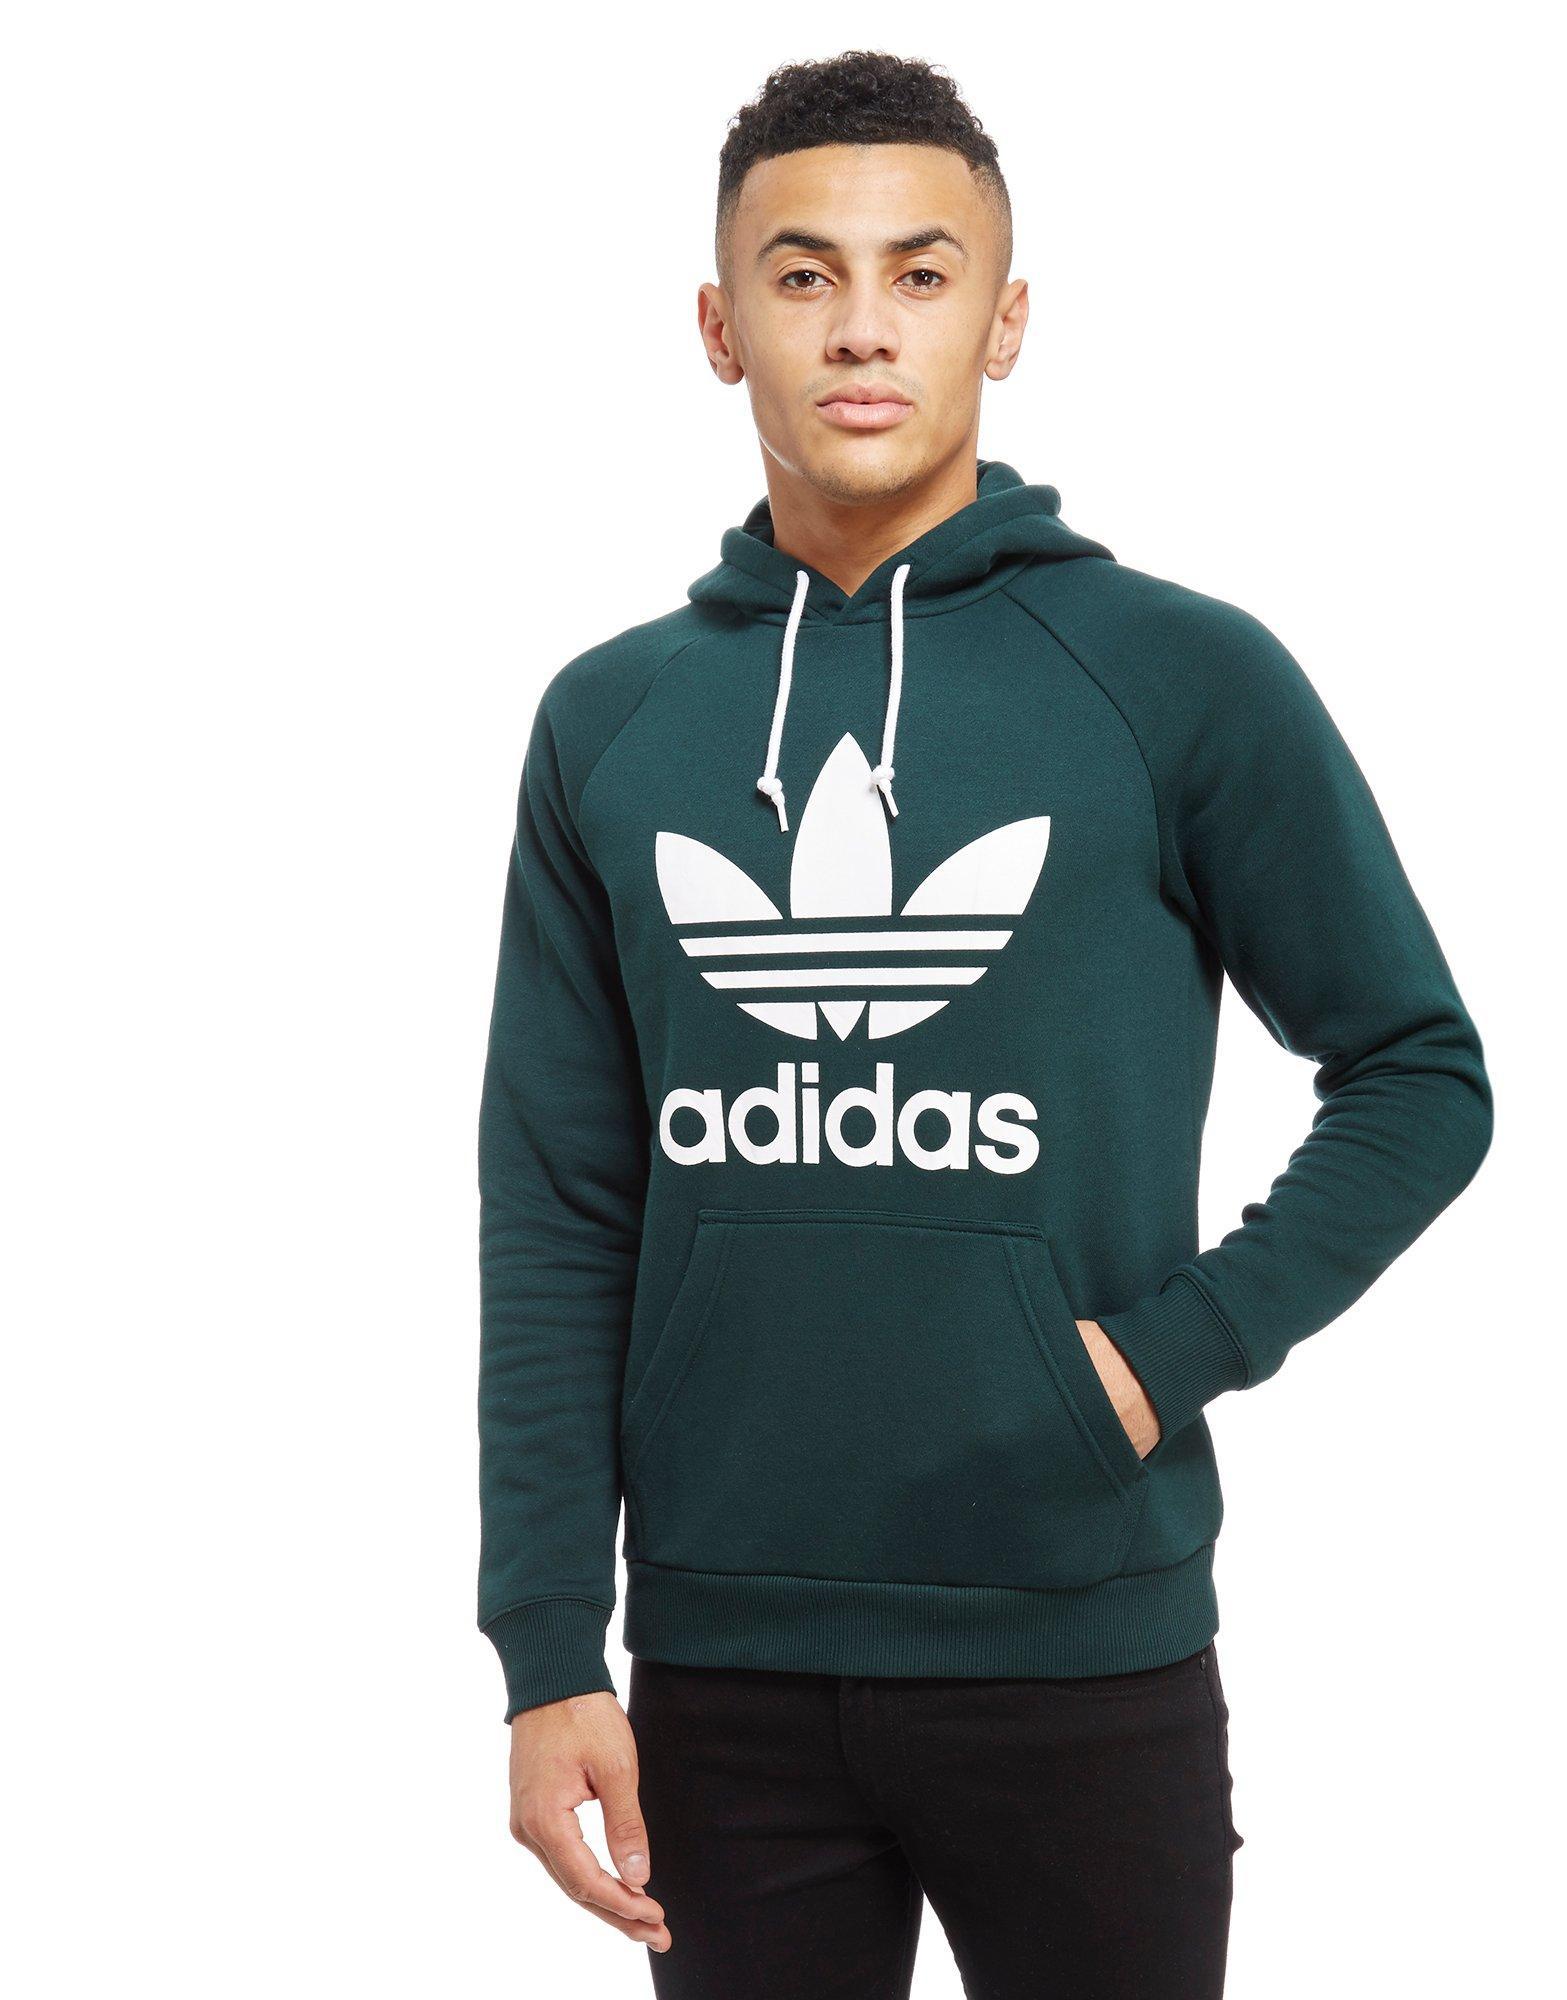 Adidas Originals Trefoil Hoodie in Green for Men - Lyst